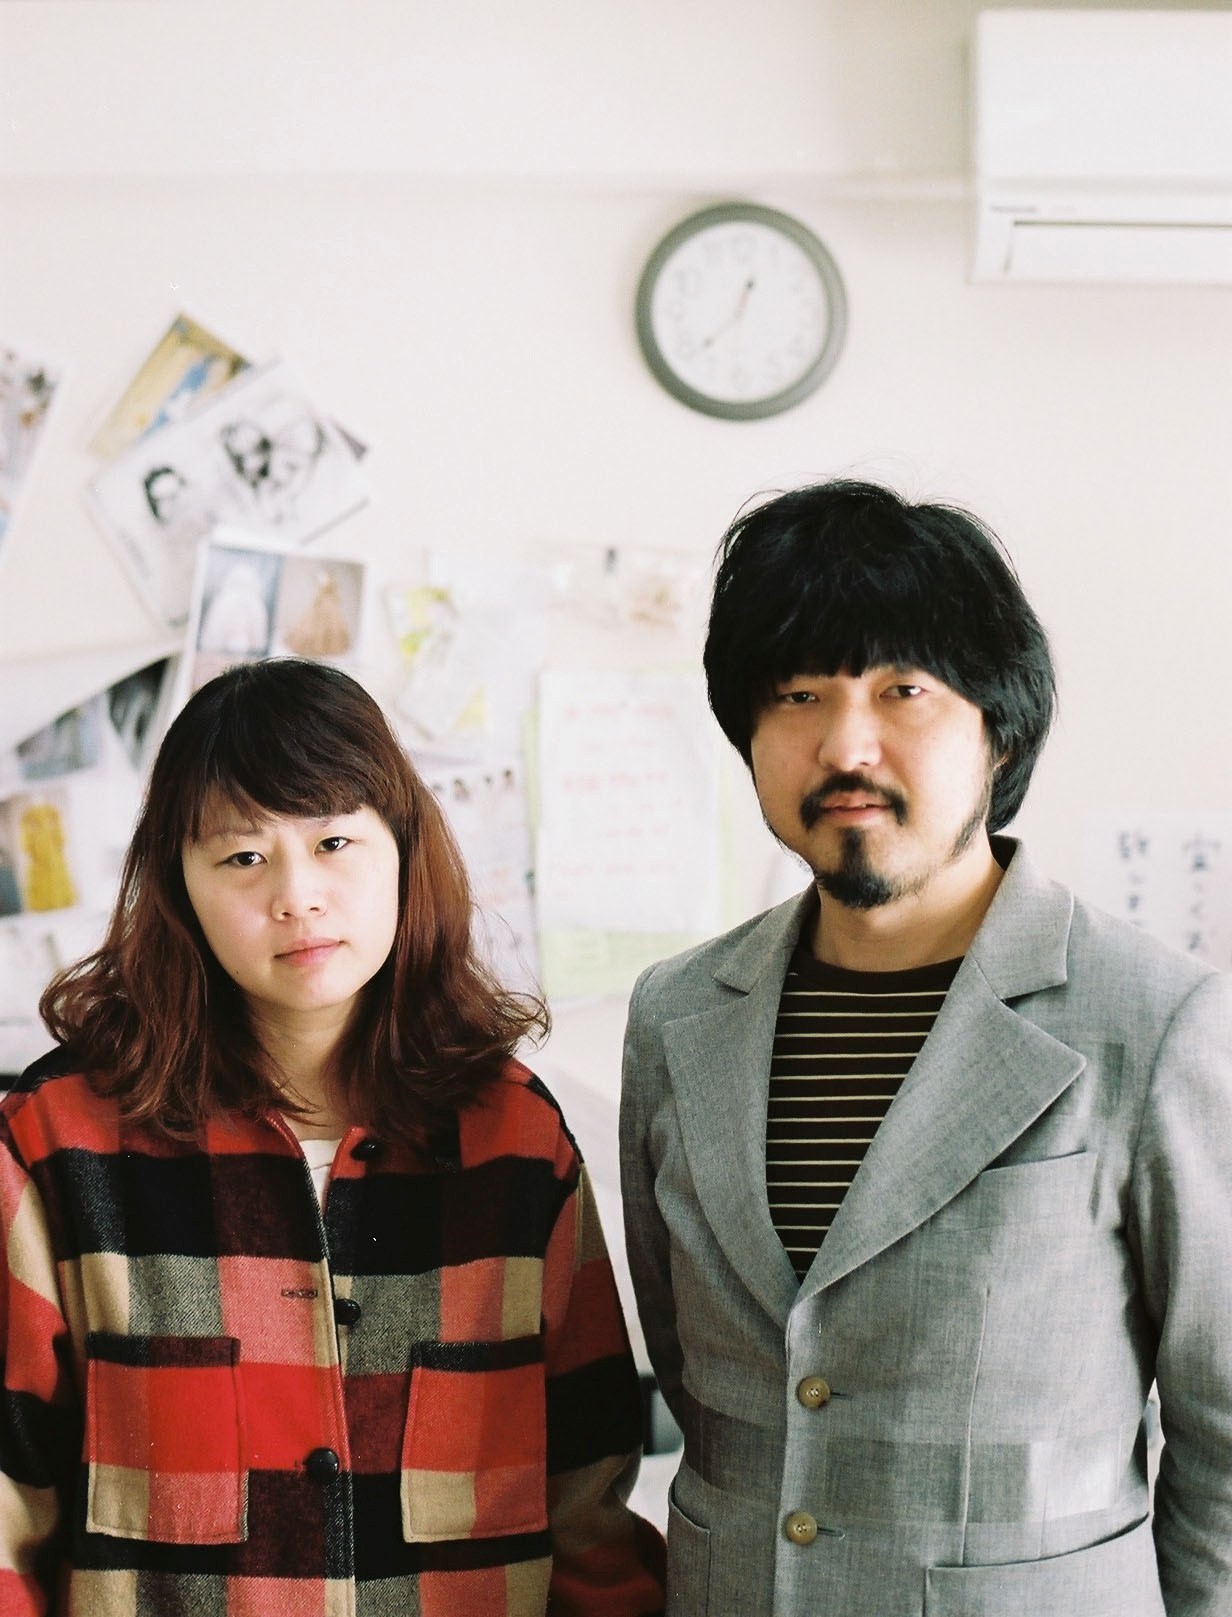 Mikio Sakabe and Jenny Fax studio visit | Dazed